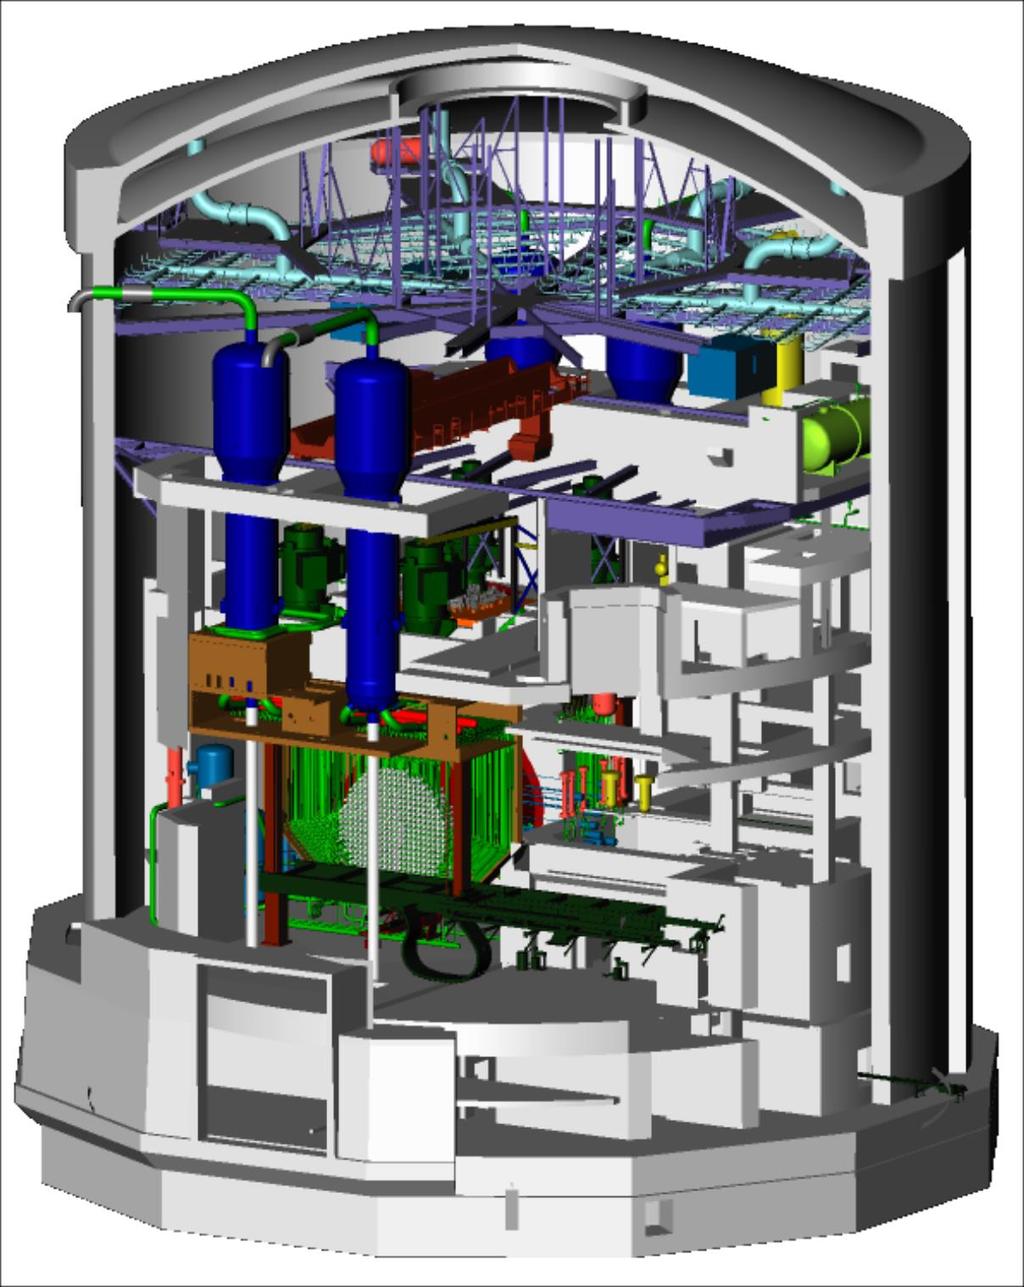 CANDU 6 7 1. Reactor face 2. Reactor coolant pump 3. Steam generator 4.